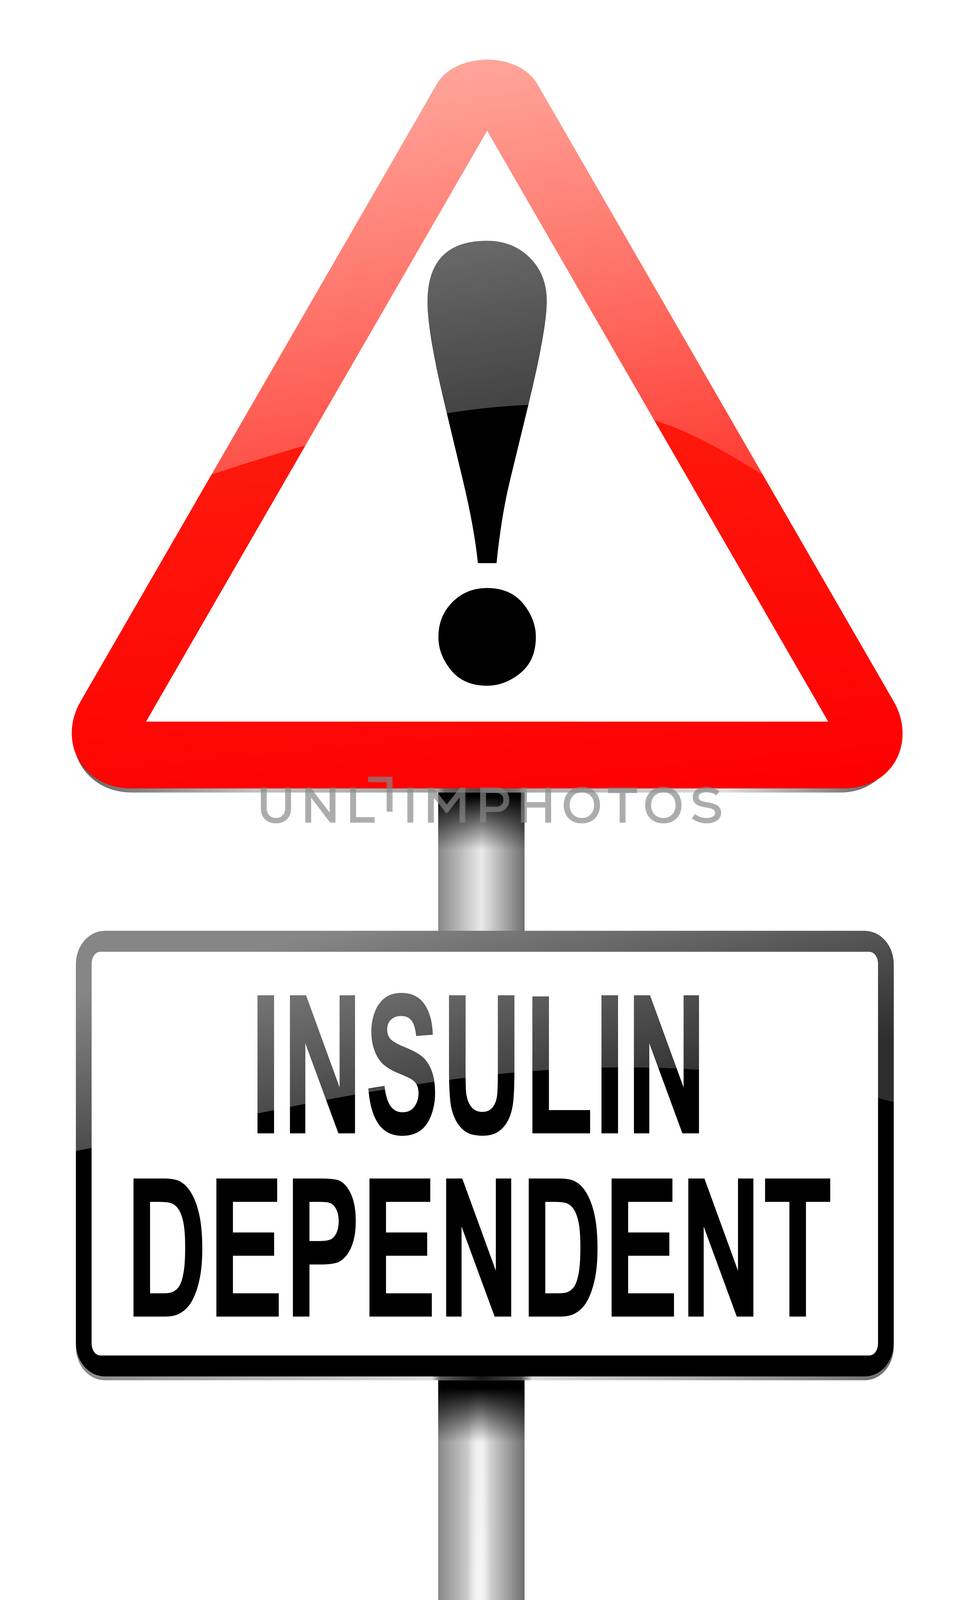 Insulin cocnept. by 72soul